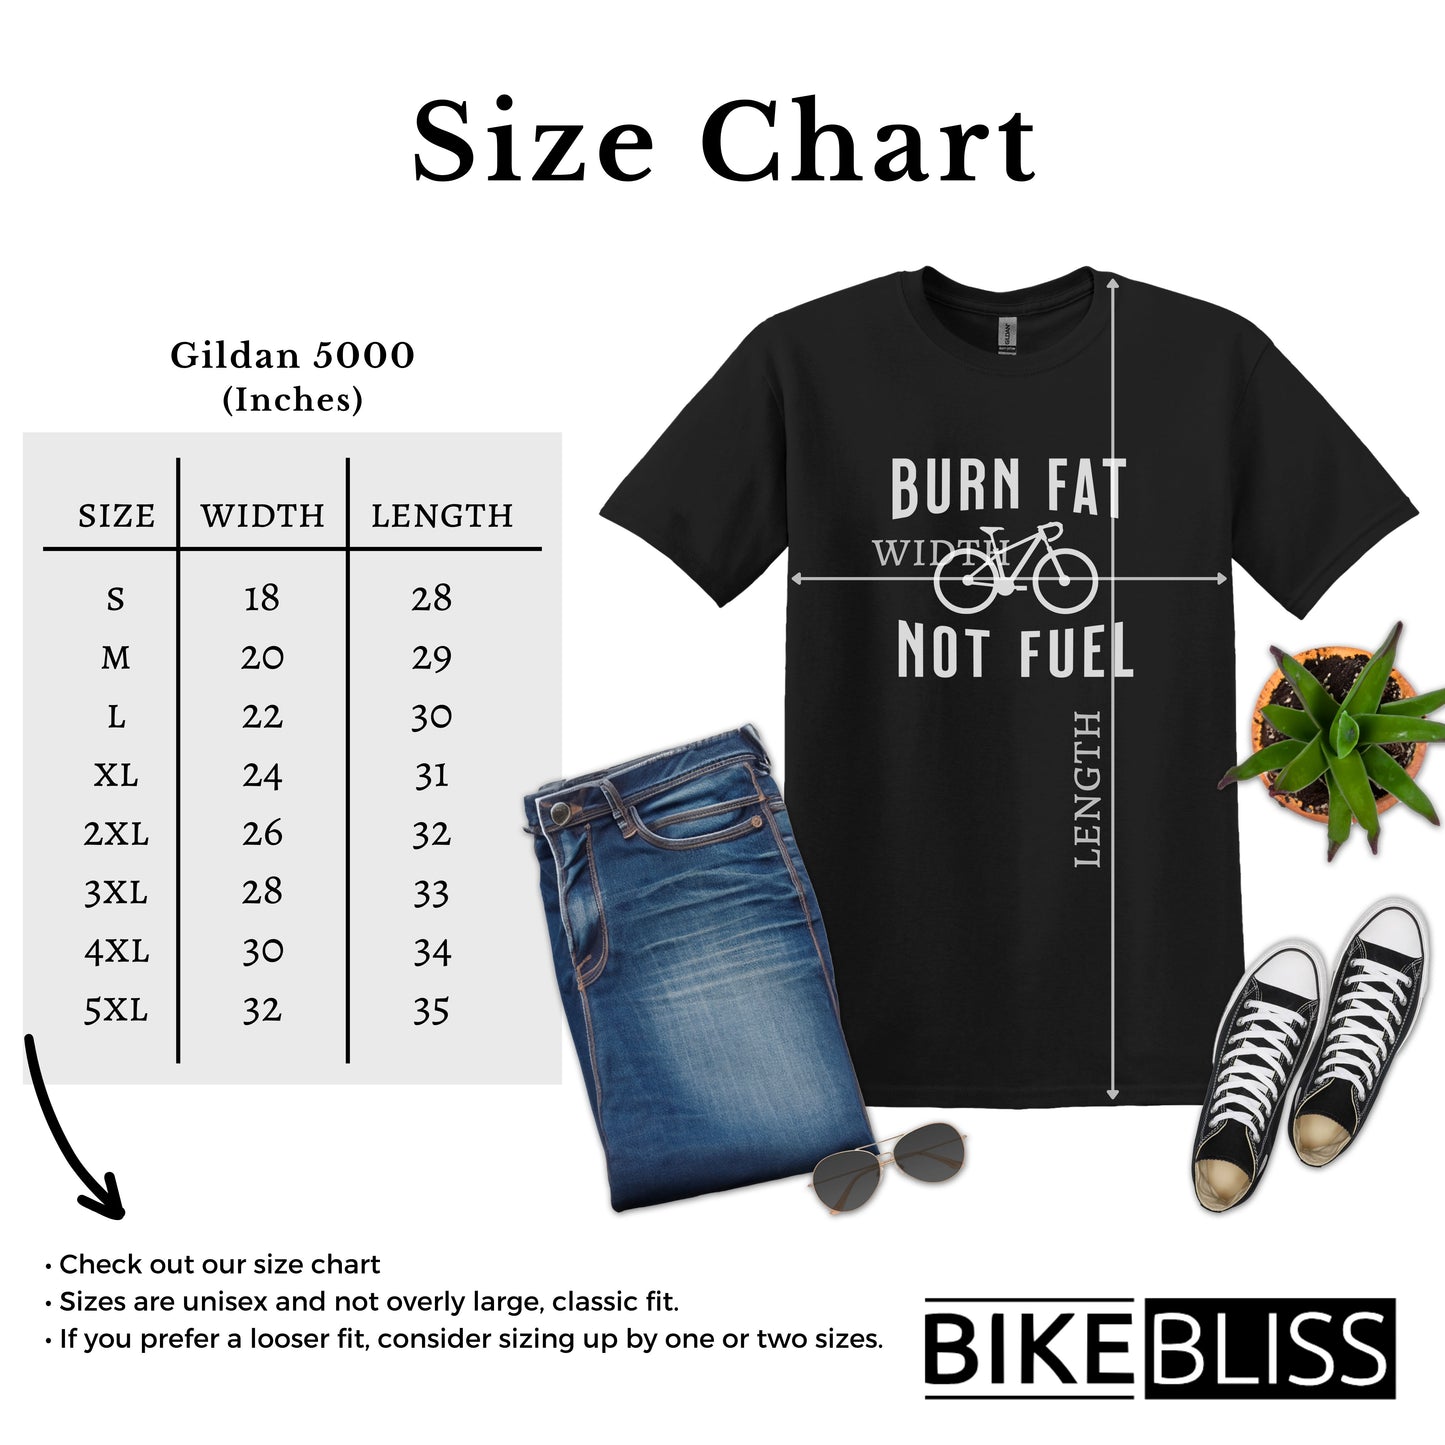 Burn Fat Not Fuel Bicycle T-shirt